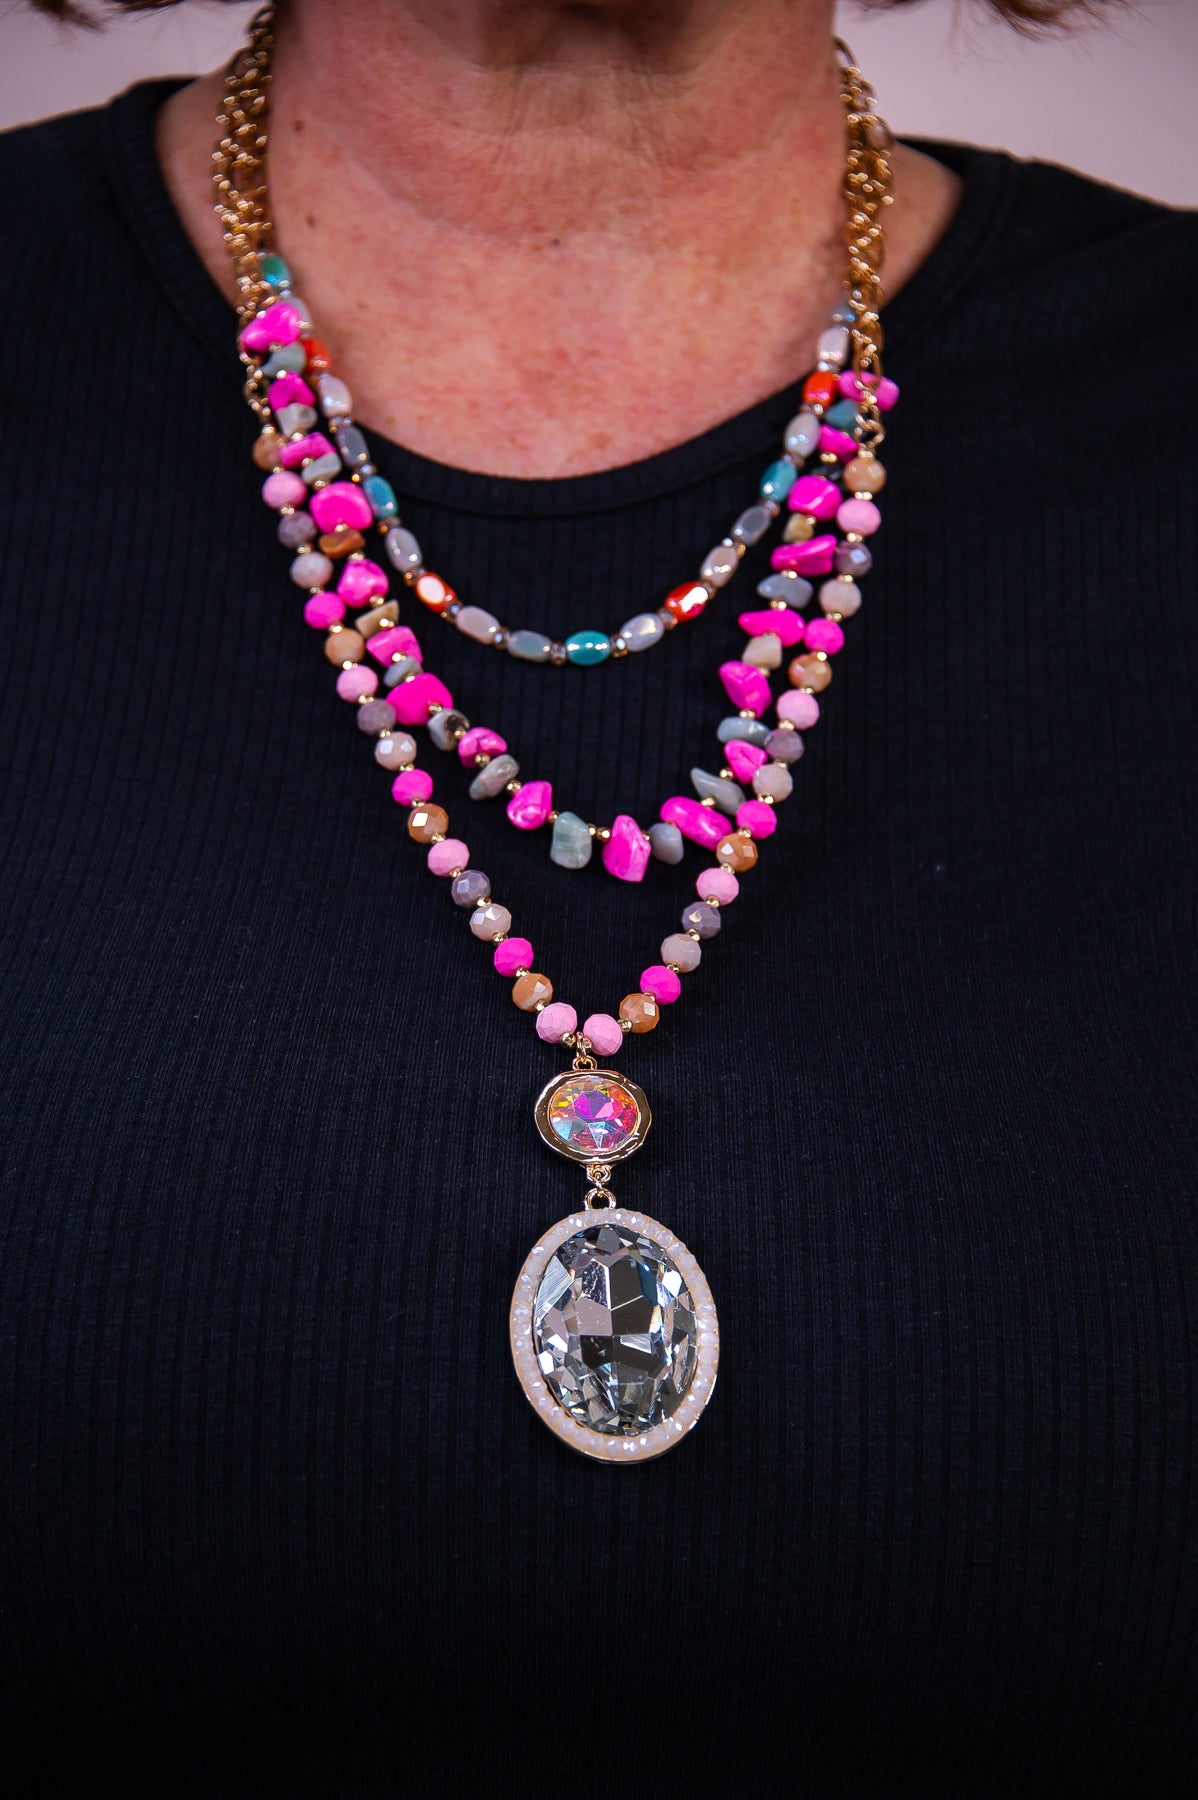 Pink/Multi Color Stone/Bead Layered Pendant Necklace - NEK4302PK